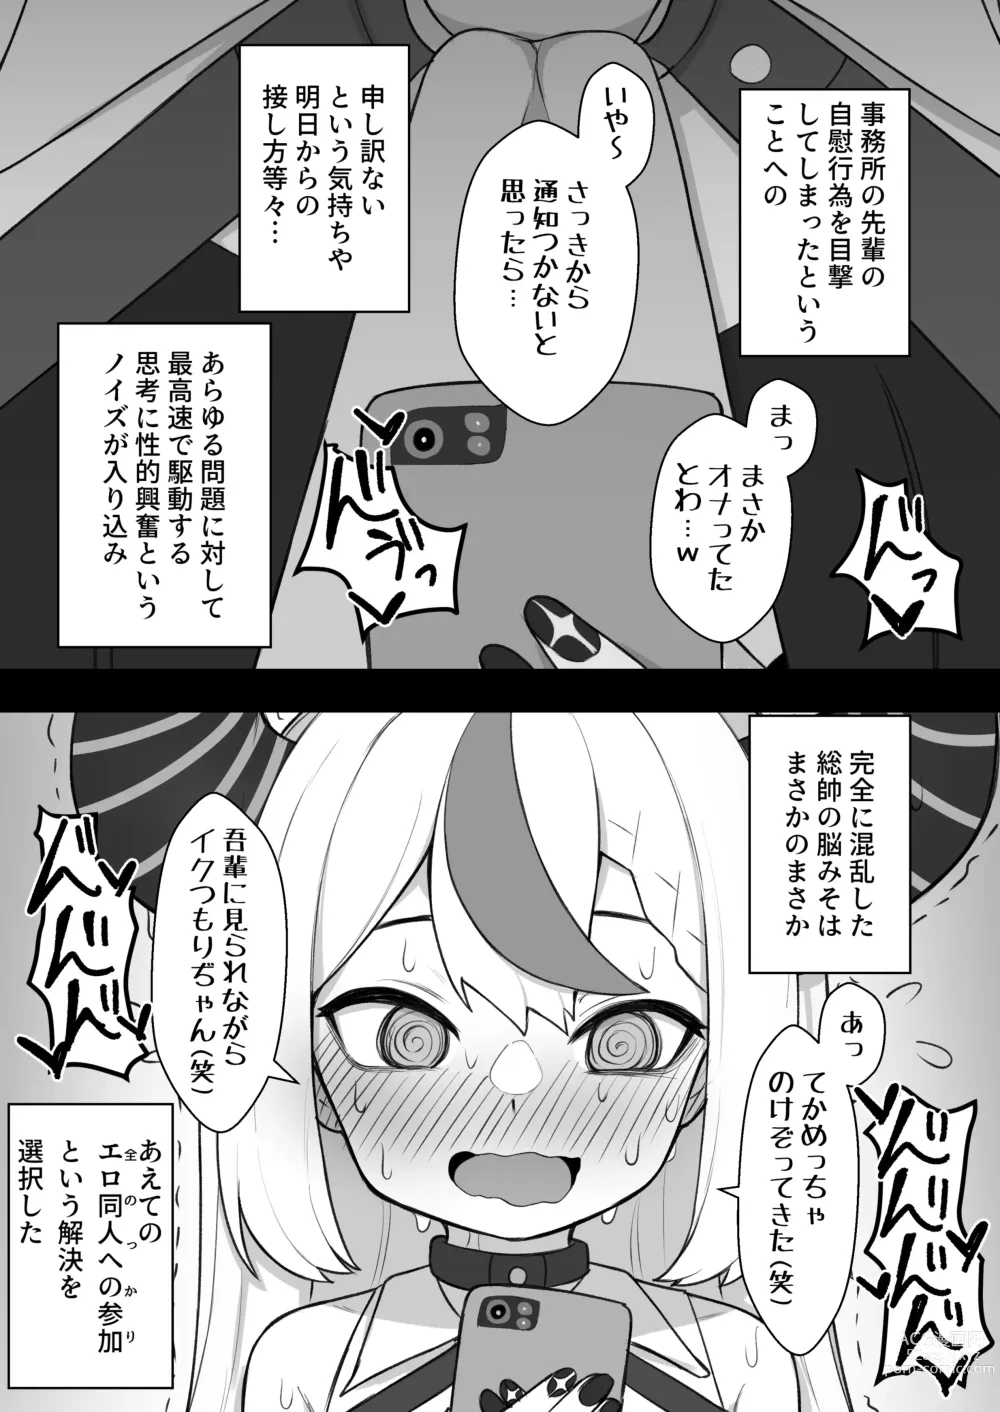 Page 14 of doujinshi Tensai Mahou Shoujo Chikunii Dai Shippai Hon